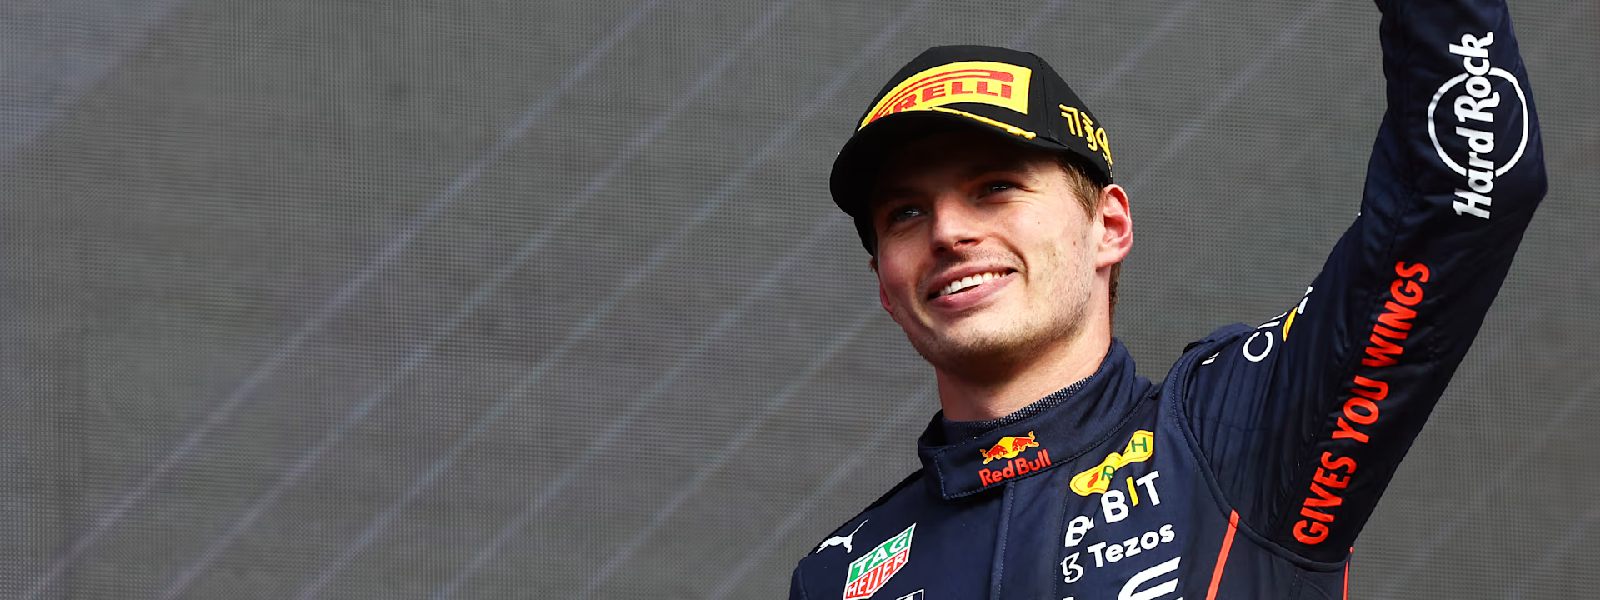 Verstappen cruises to Belgian Grand Prix victory